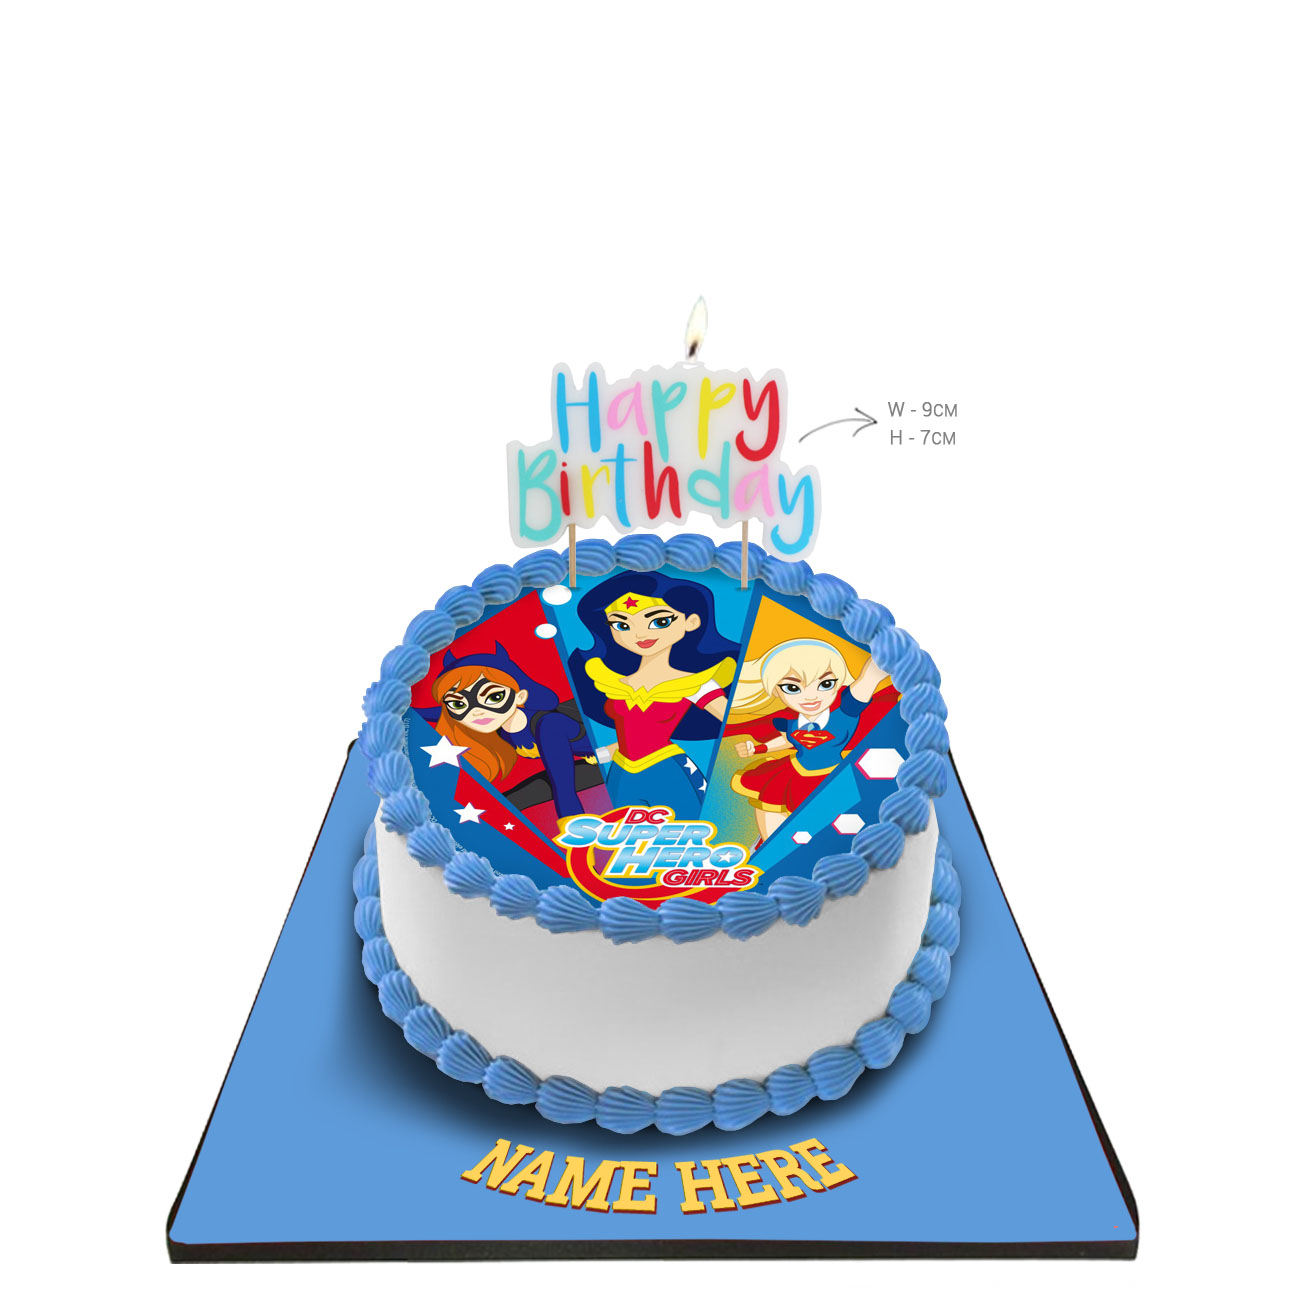 Super Hero Girls Cake with Happy Birthday Candle